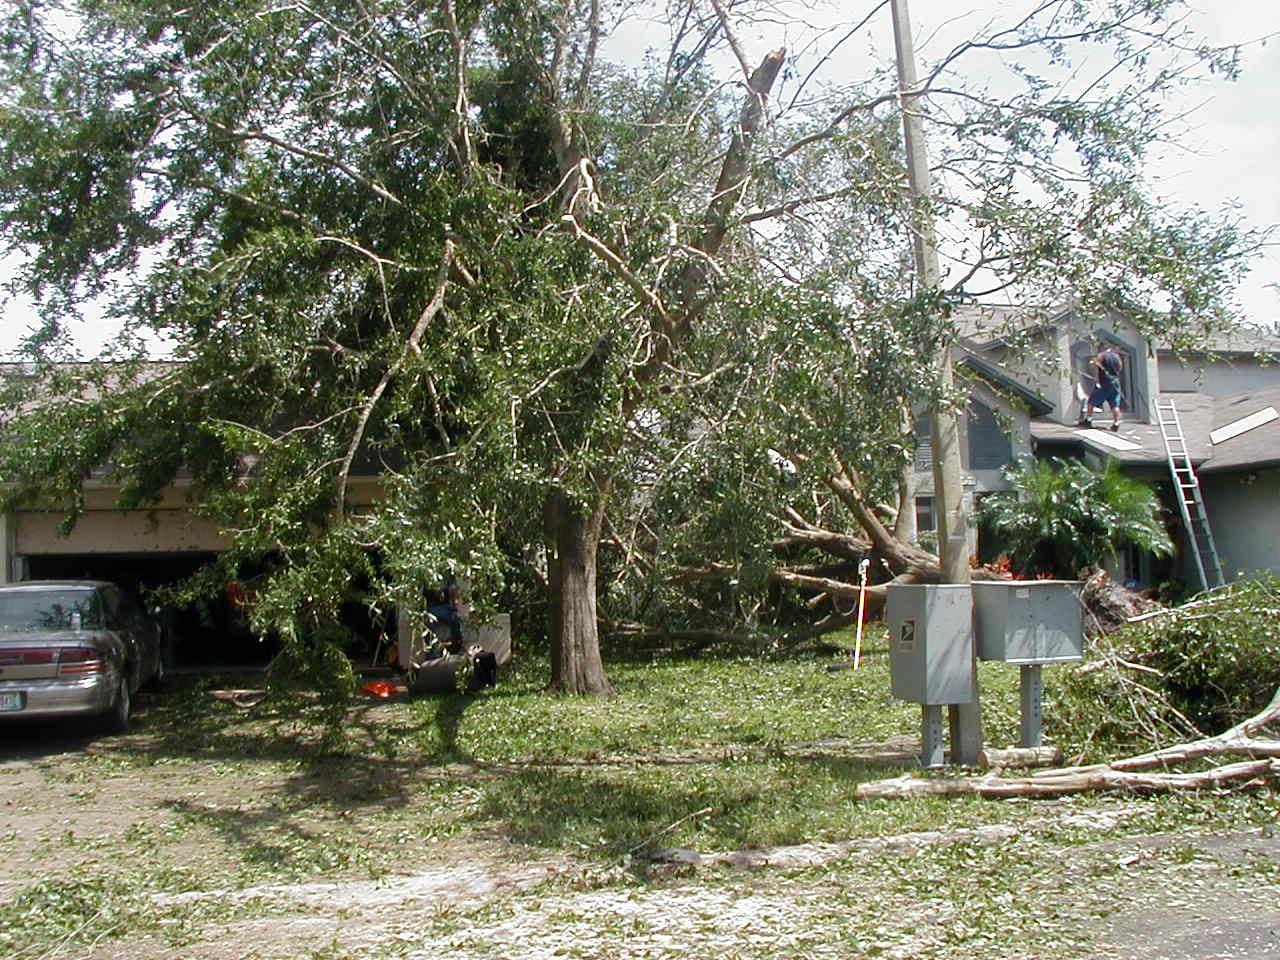 a tree fallen off a house